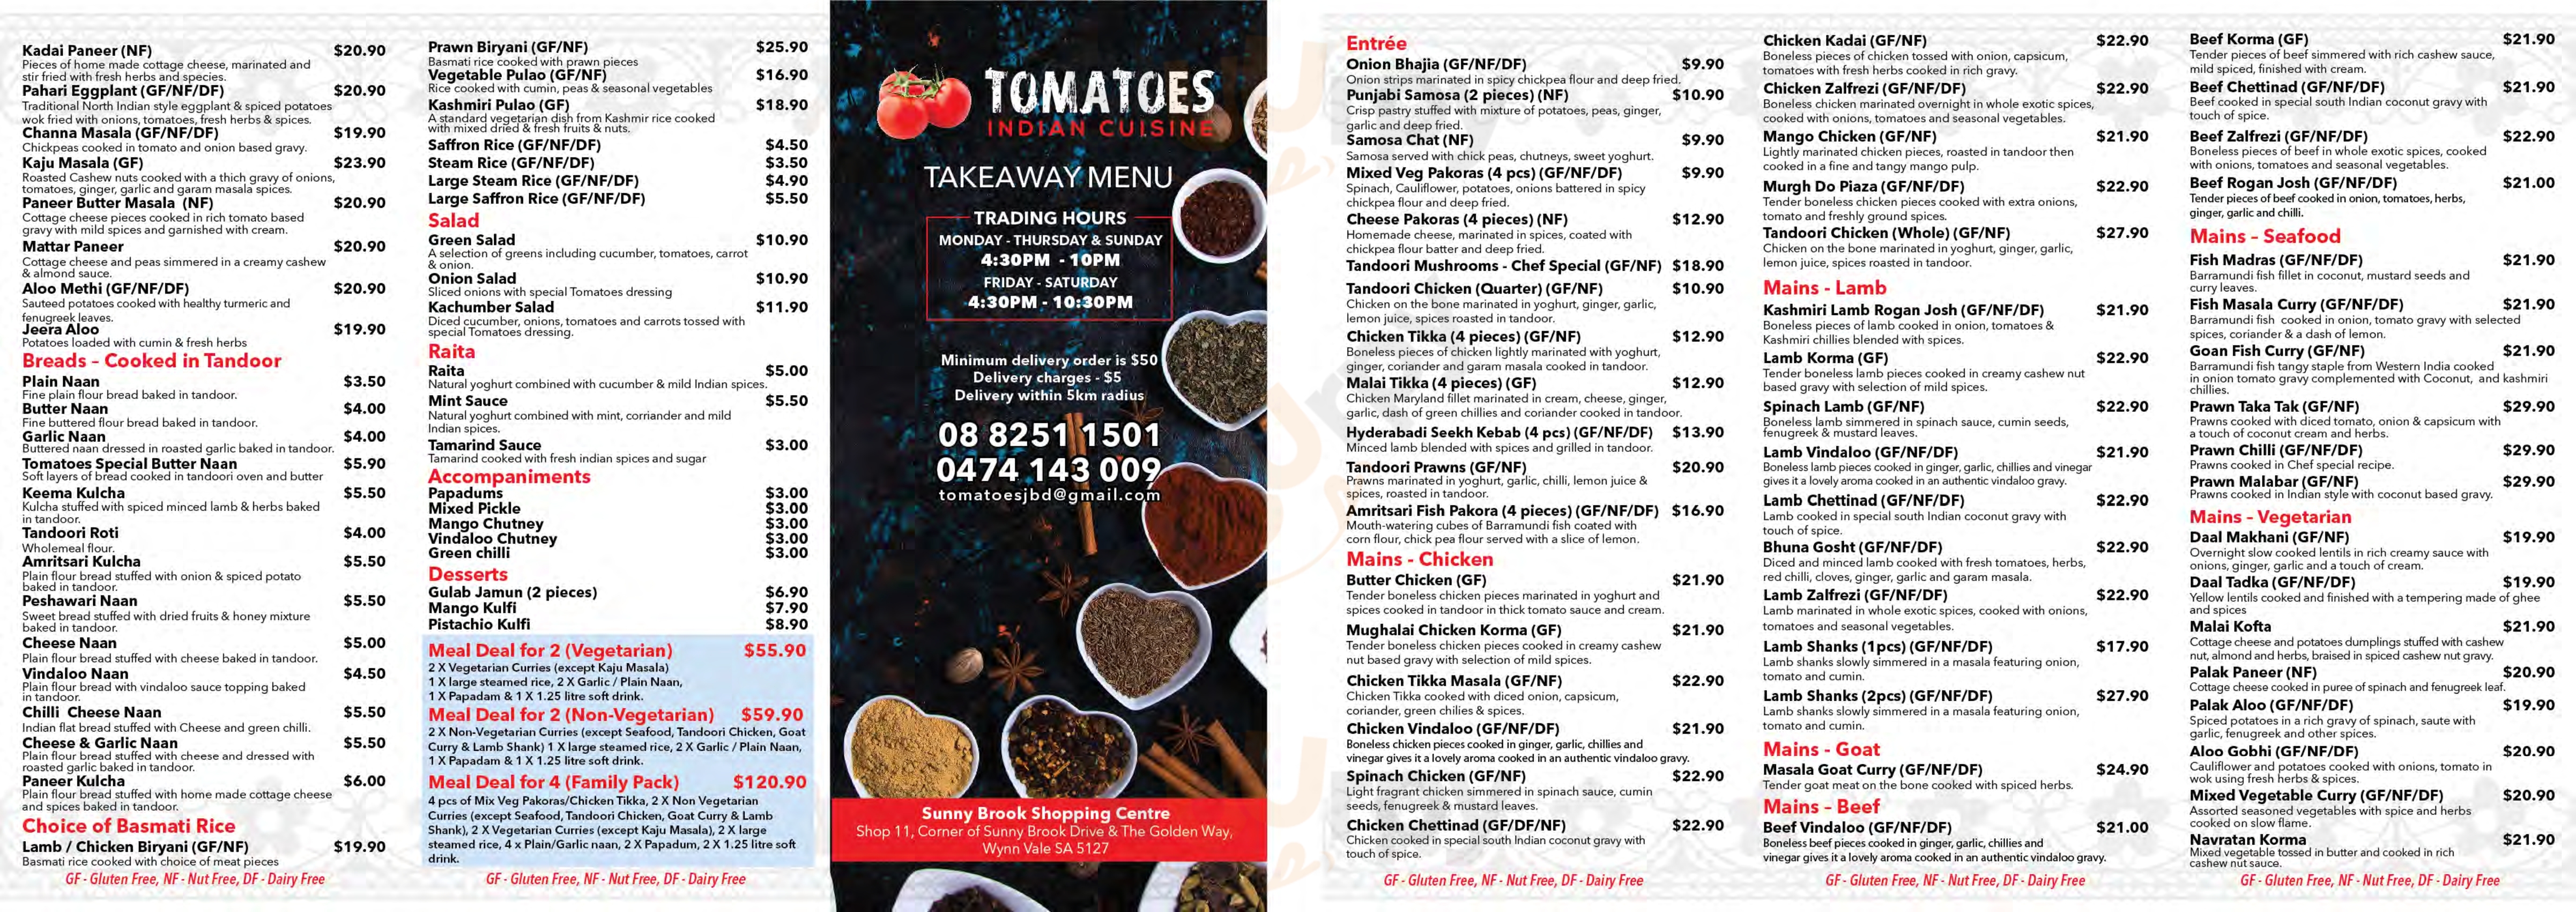 Tomatoes Indian Cuisine Adelaide Menu - 1